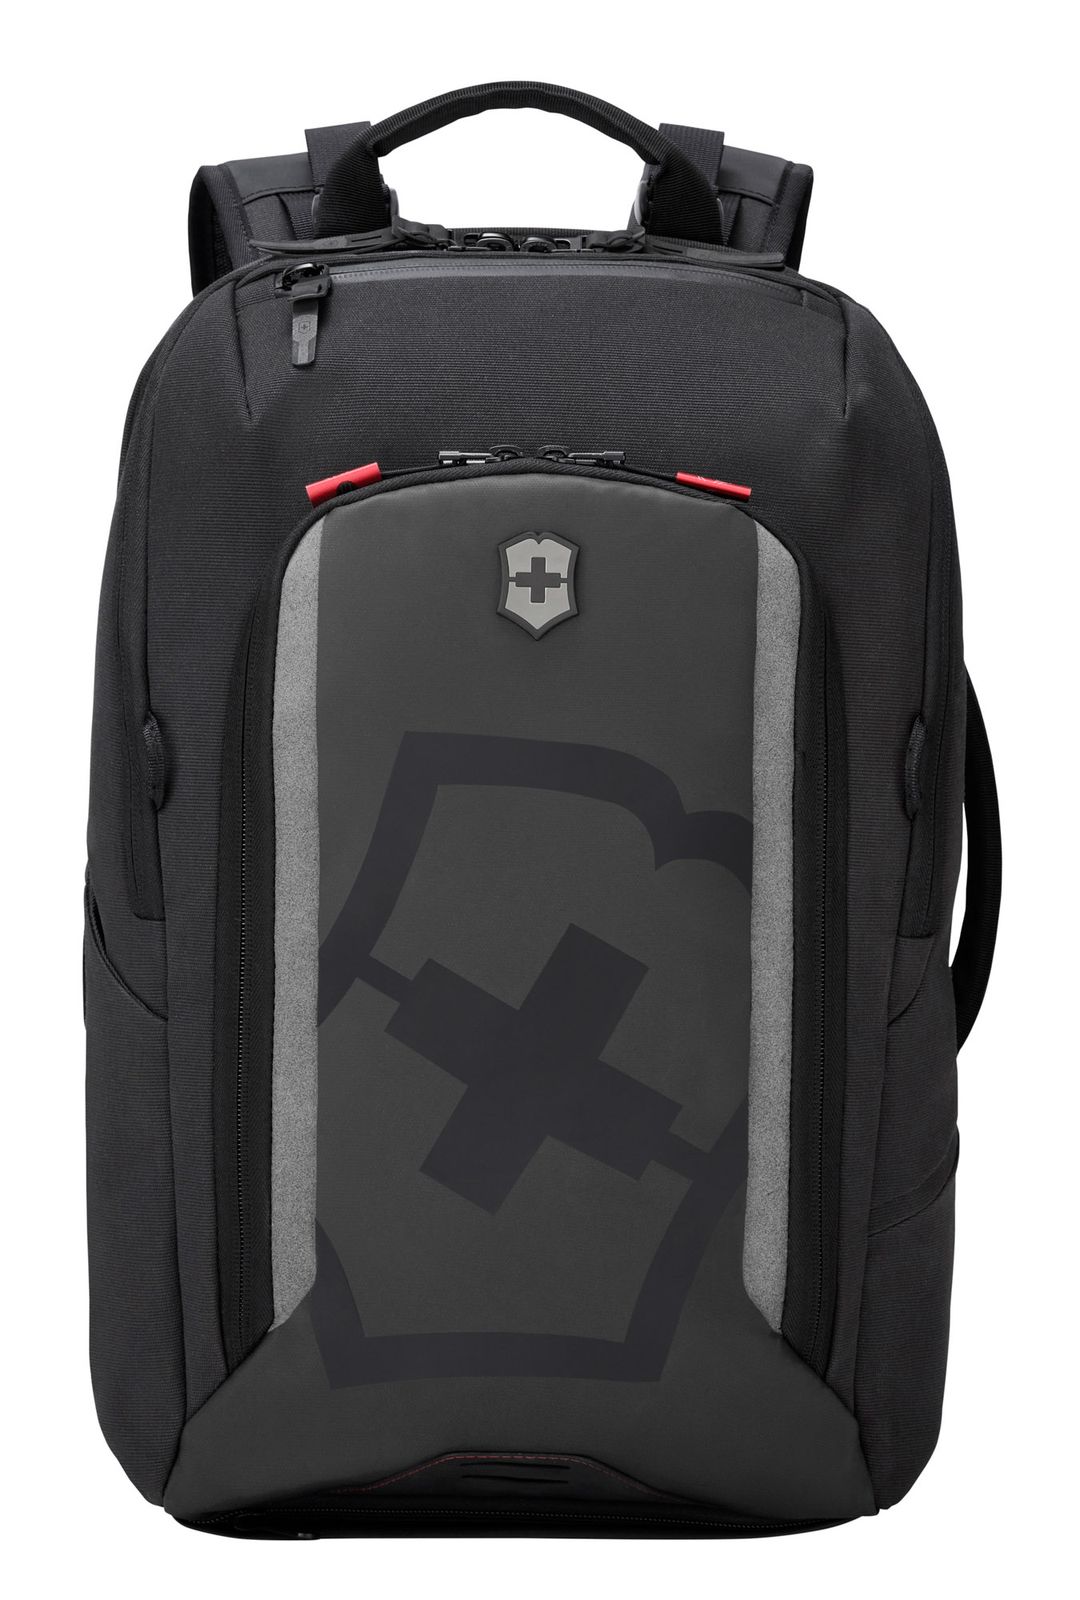 VICTORINOX backpack Commuter Backpack Black | Buy bags, purses ...